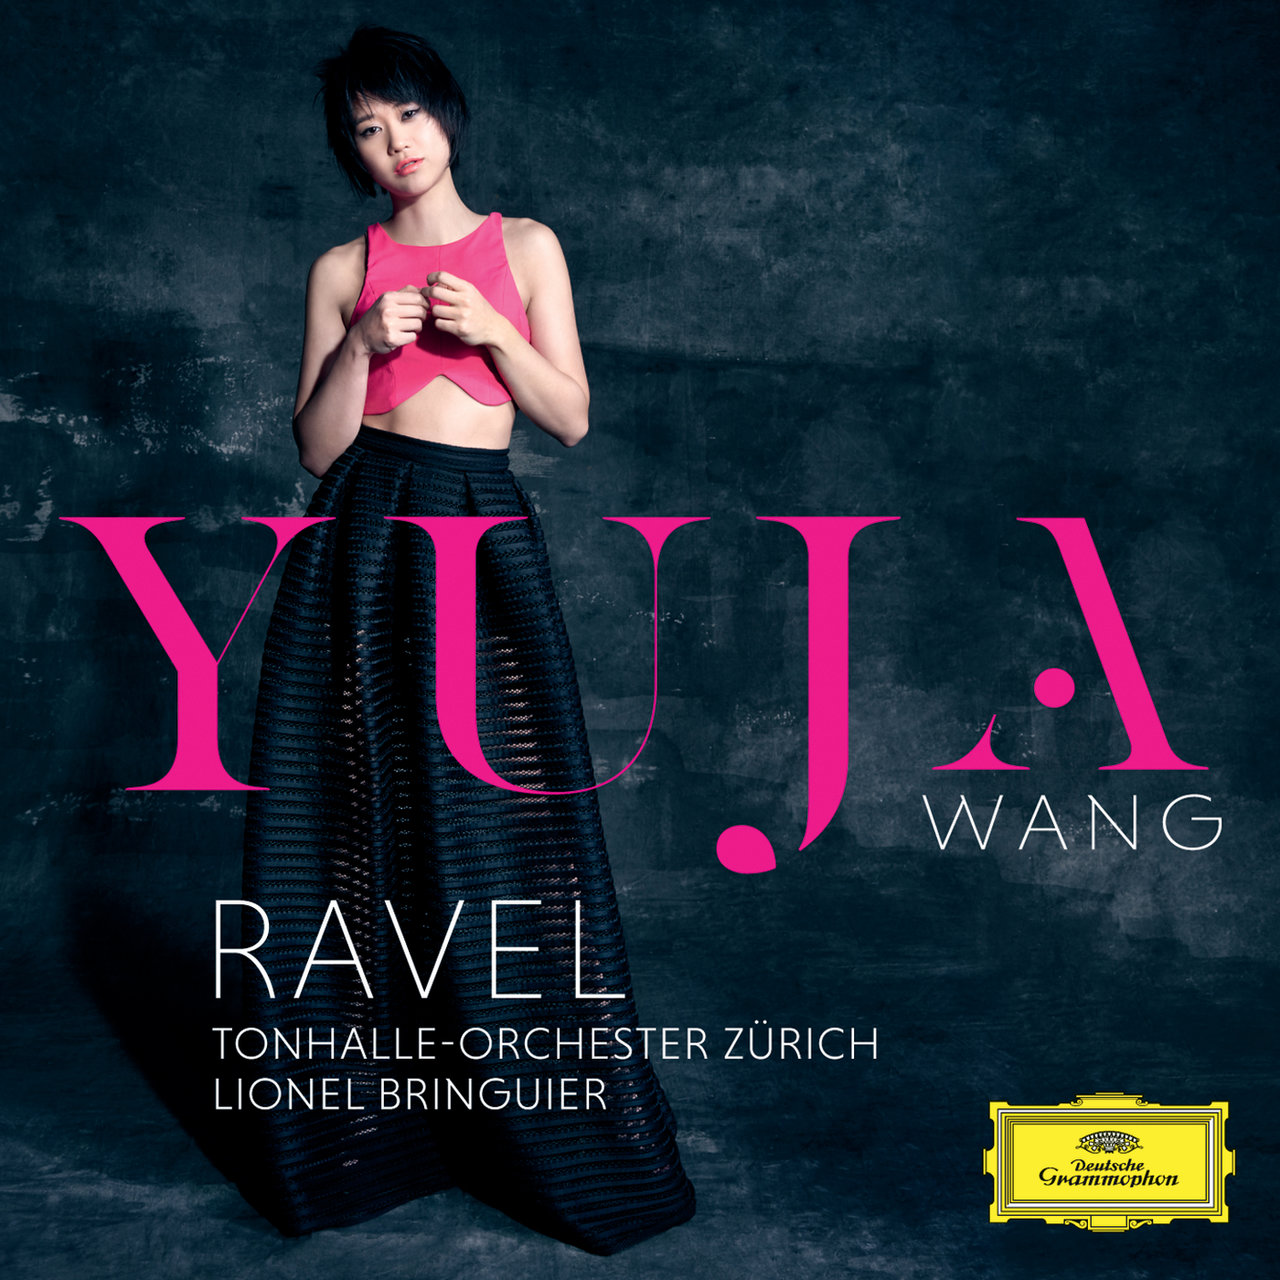 Yuja Wang, Tonhalle-Orchester Zürich, Lionel Bring - Ravel [2015]